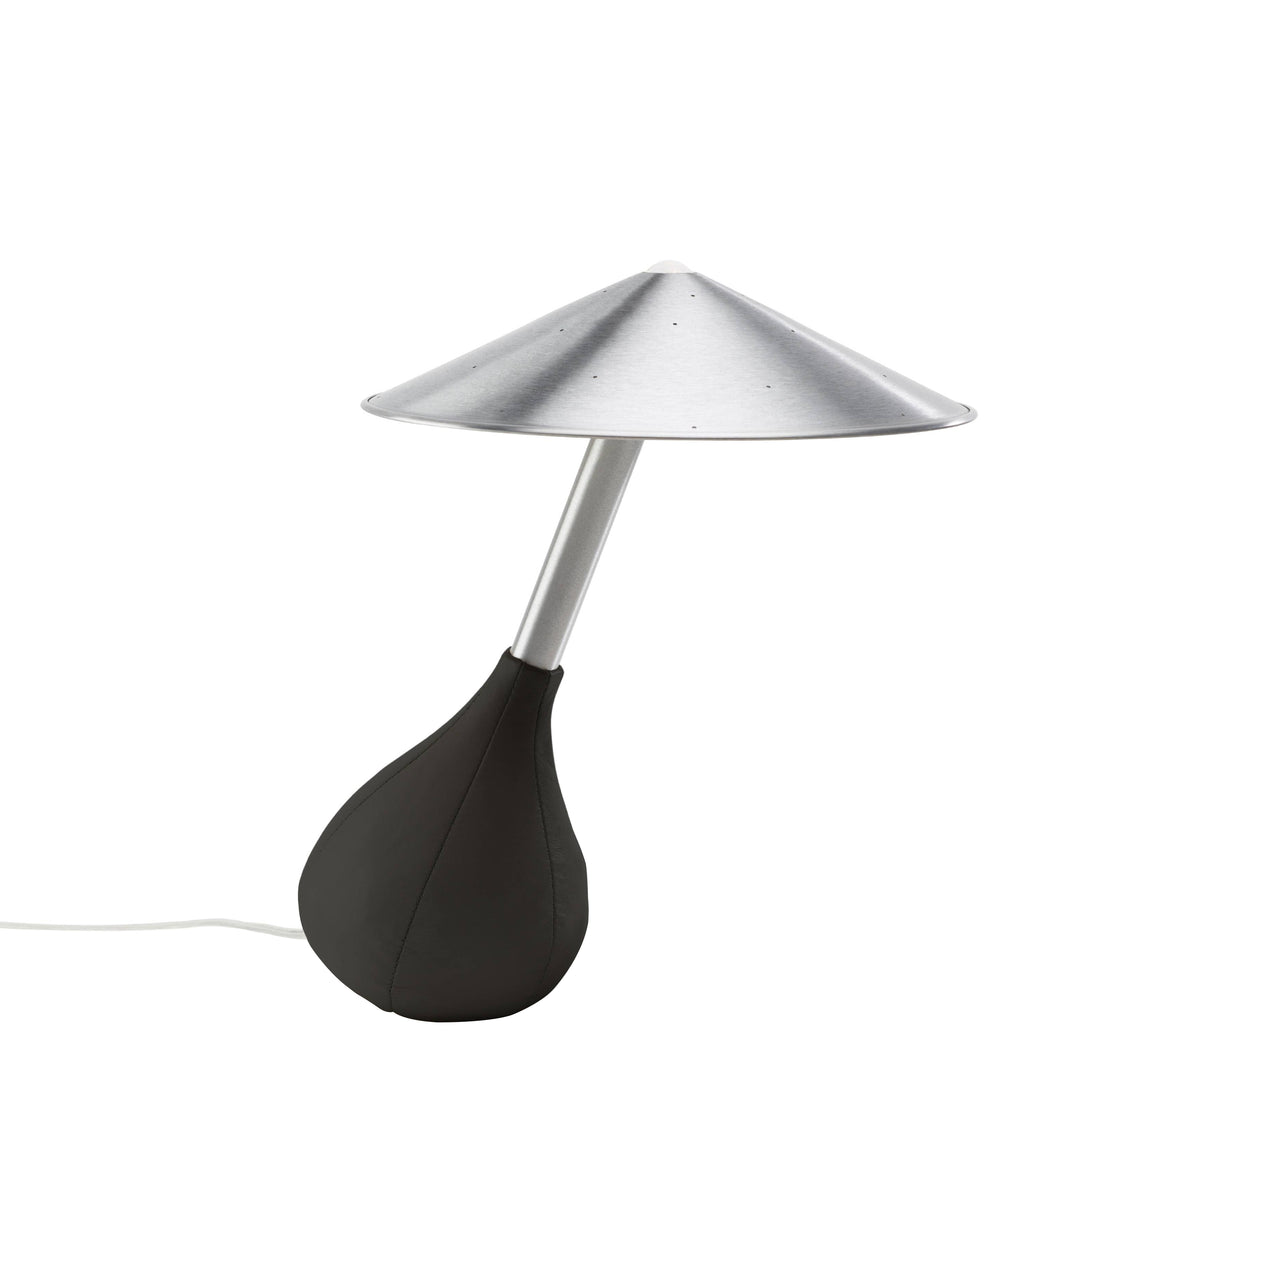 Outdoor Table Lamps & Lights - Buy Online